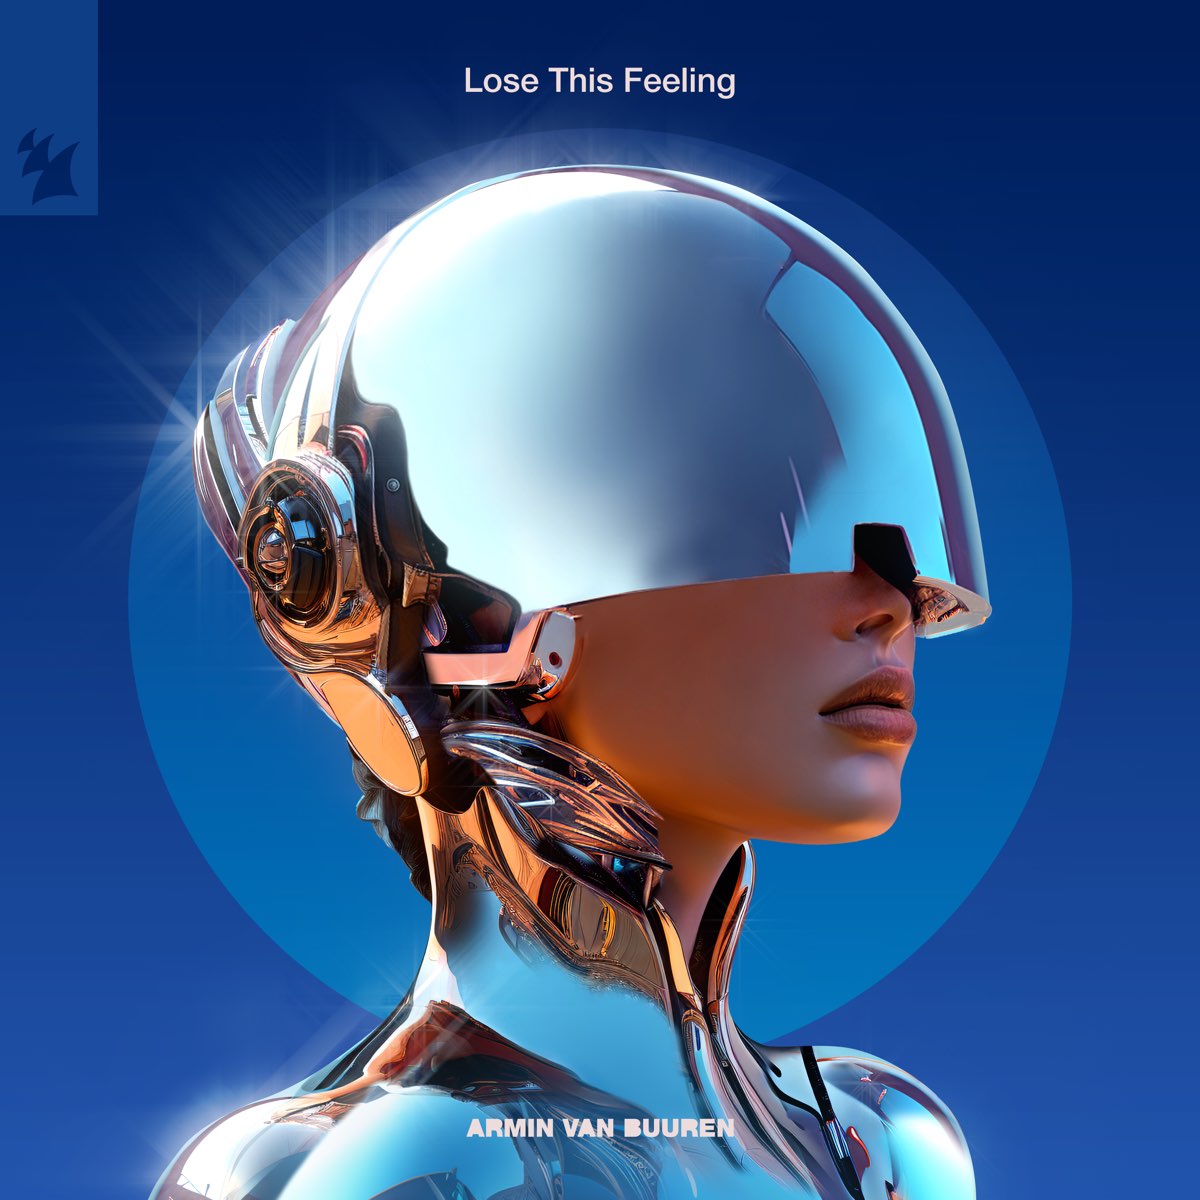 Armin van Buuren Lose This Feeling cover artwork